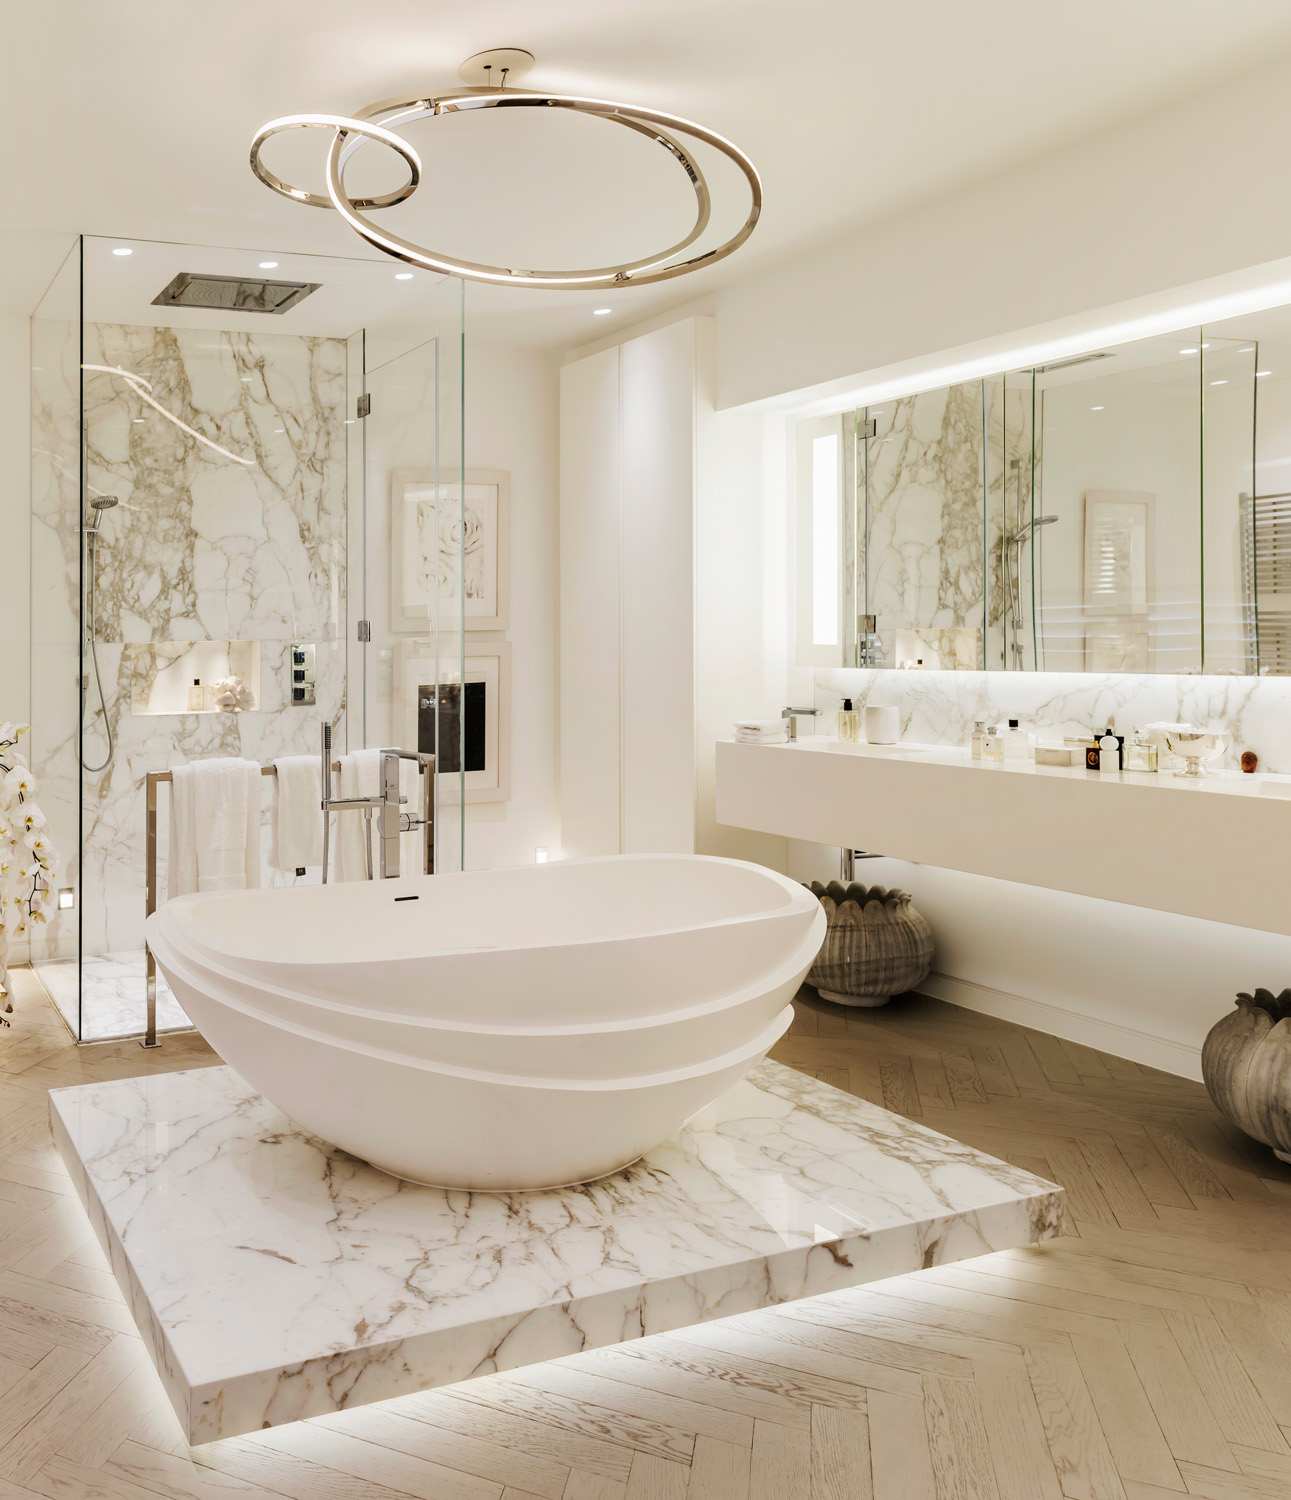 Bathroom by Kelly Hoppen - luxury and minimalist interior design studio in London